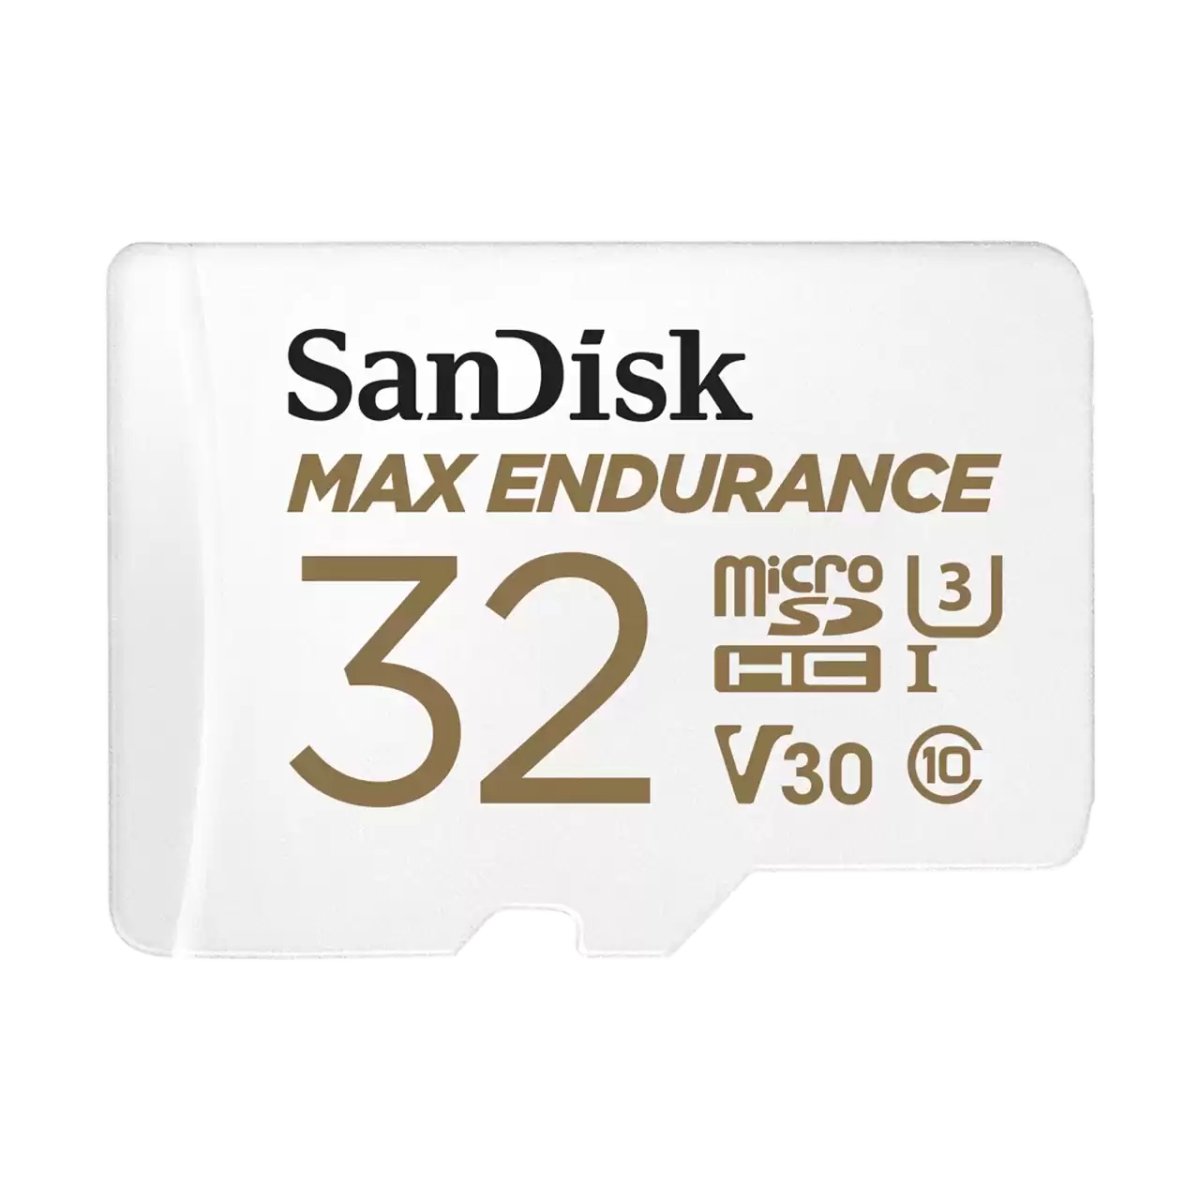 SanDisk Max Endurance/micro SDHC/32GB/100MBps/UHS-I U3 / Class 10/+ Ad